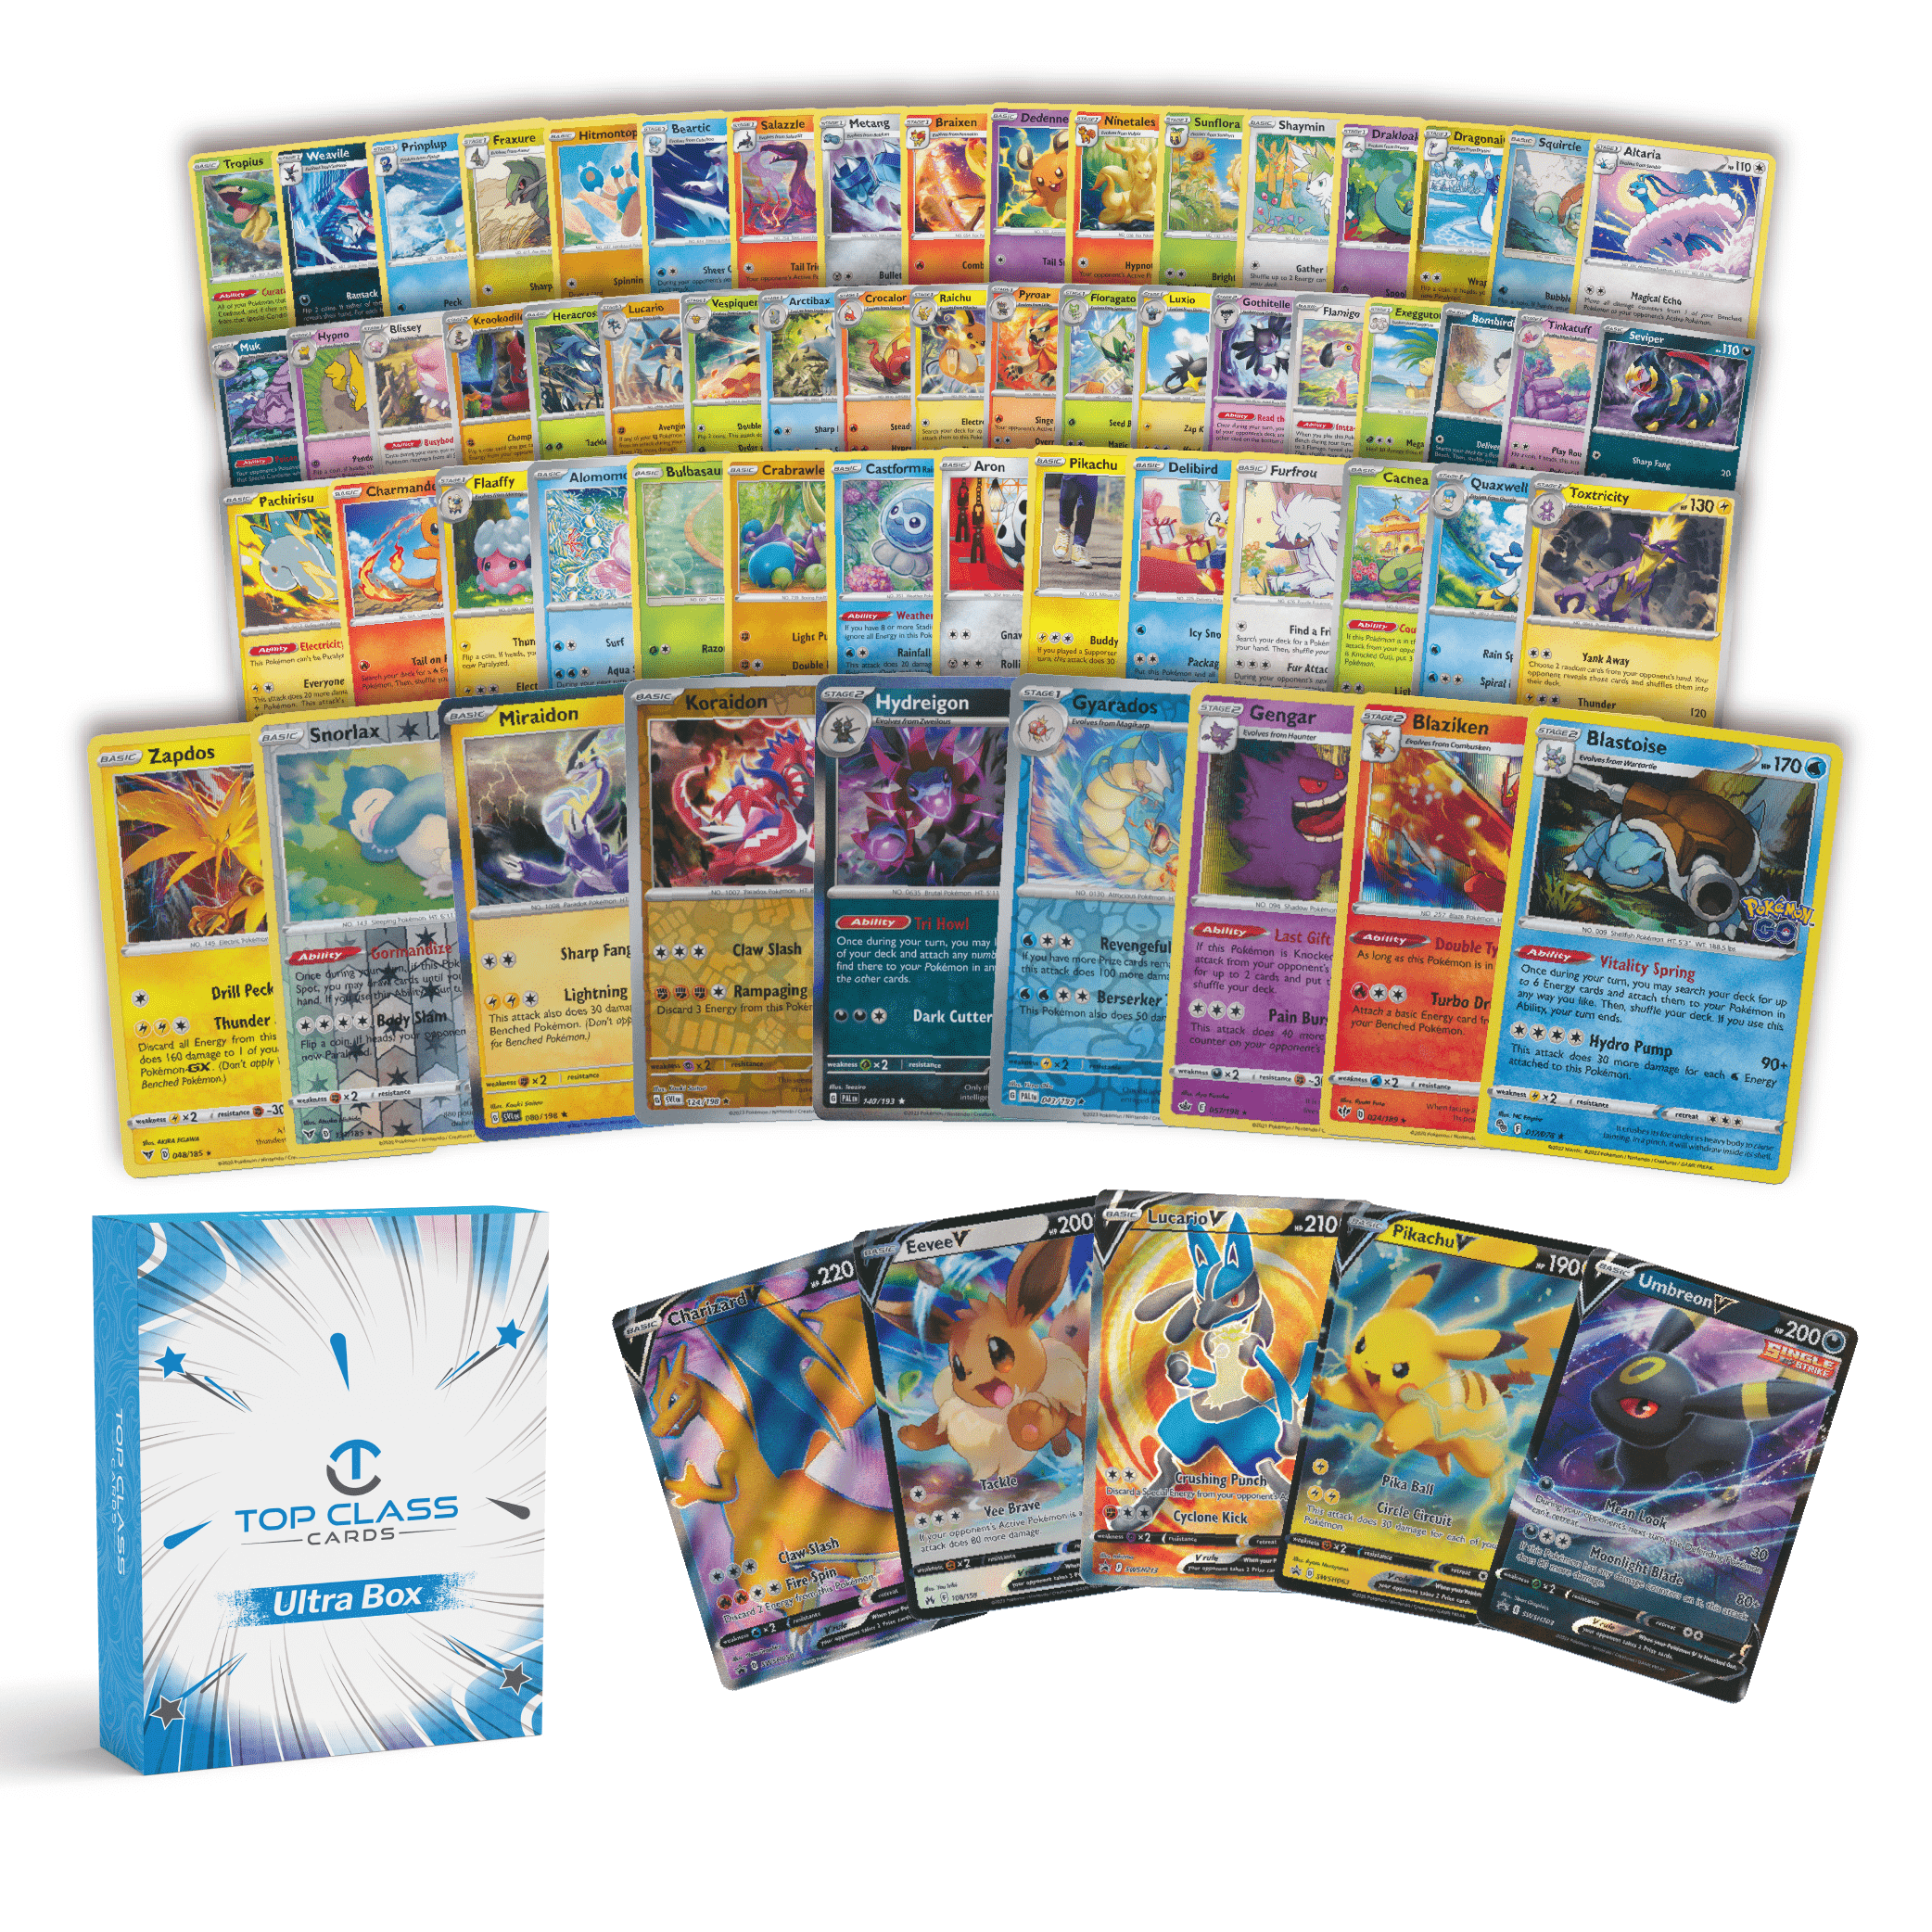 100 Assorted Pokemon Trading Cards with 7 Bonus Free Holo Foils